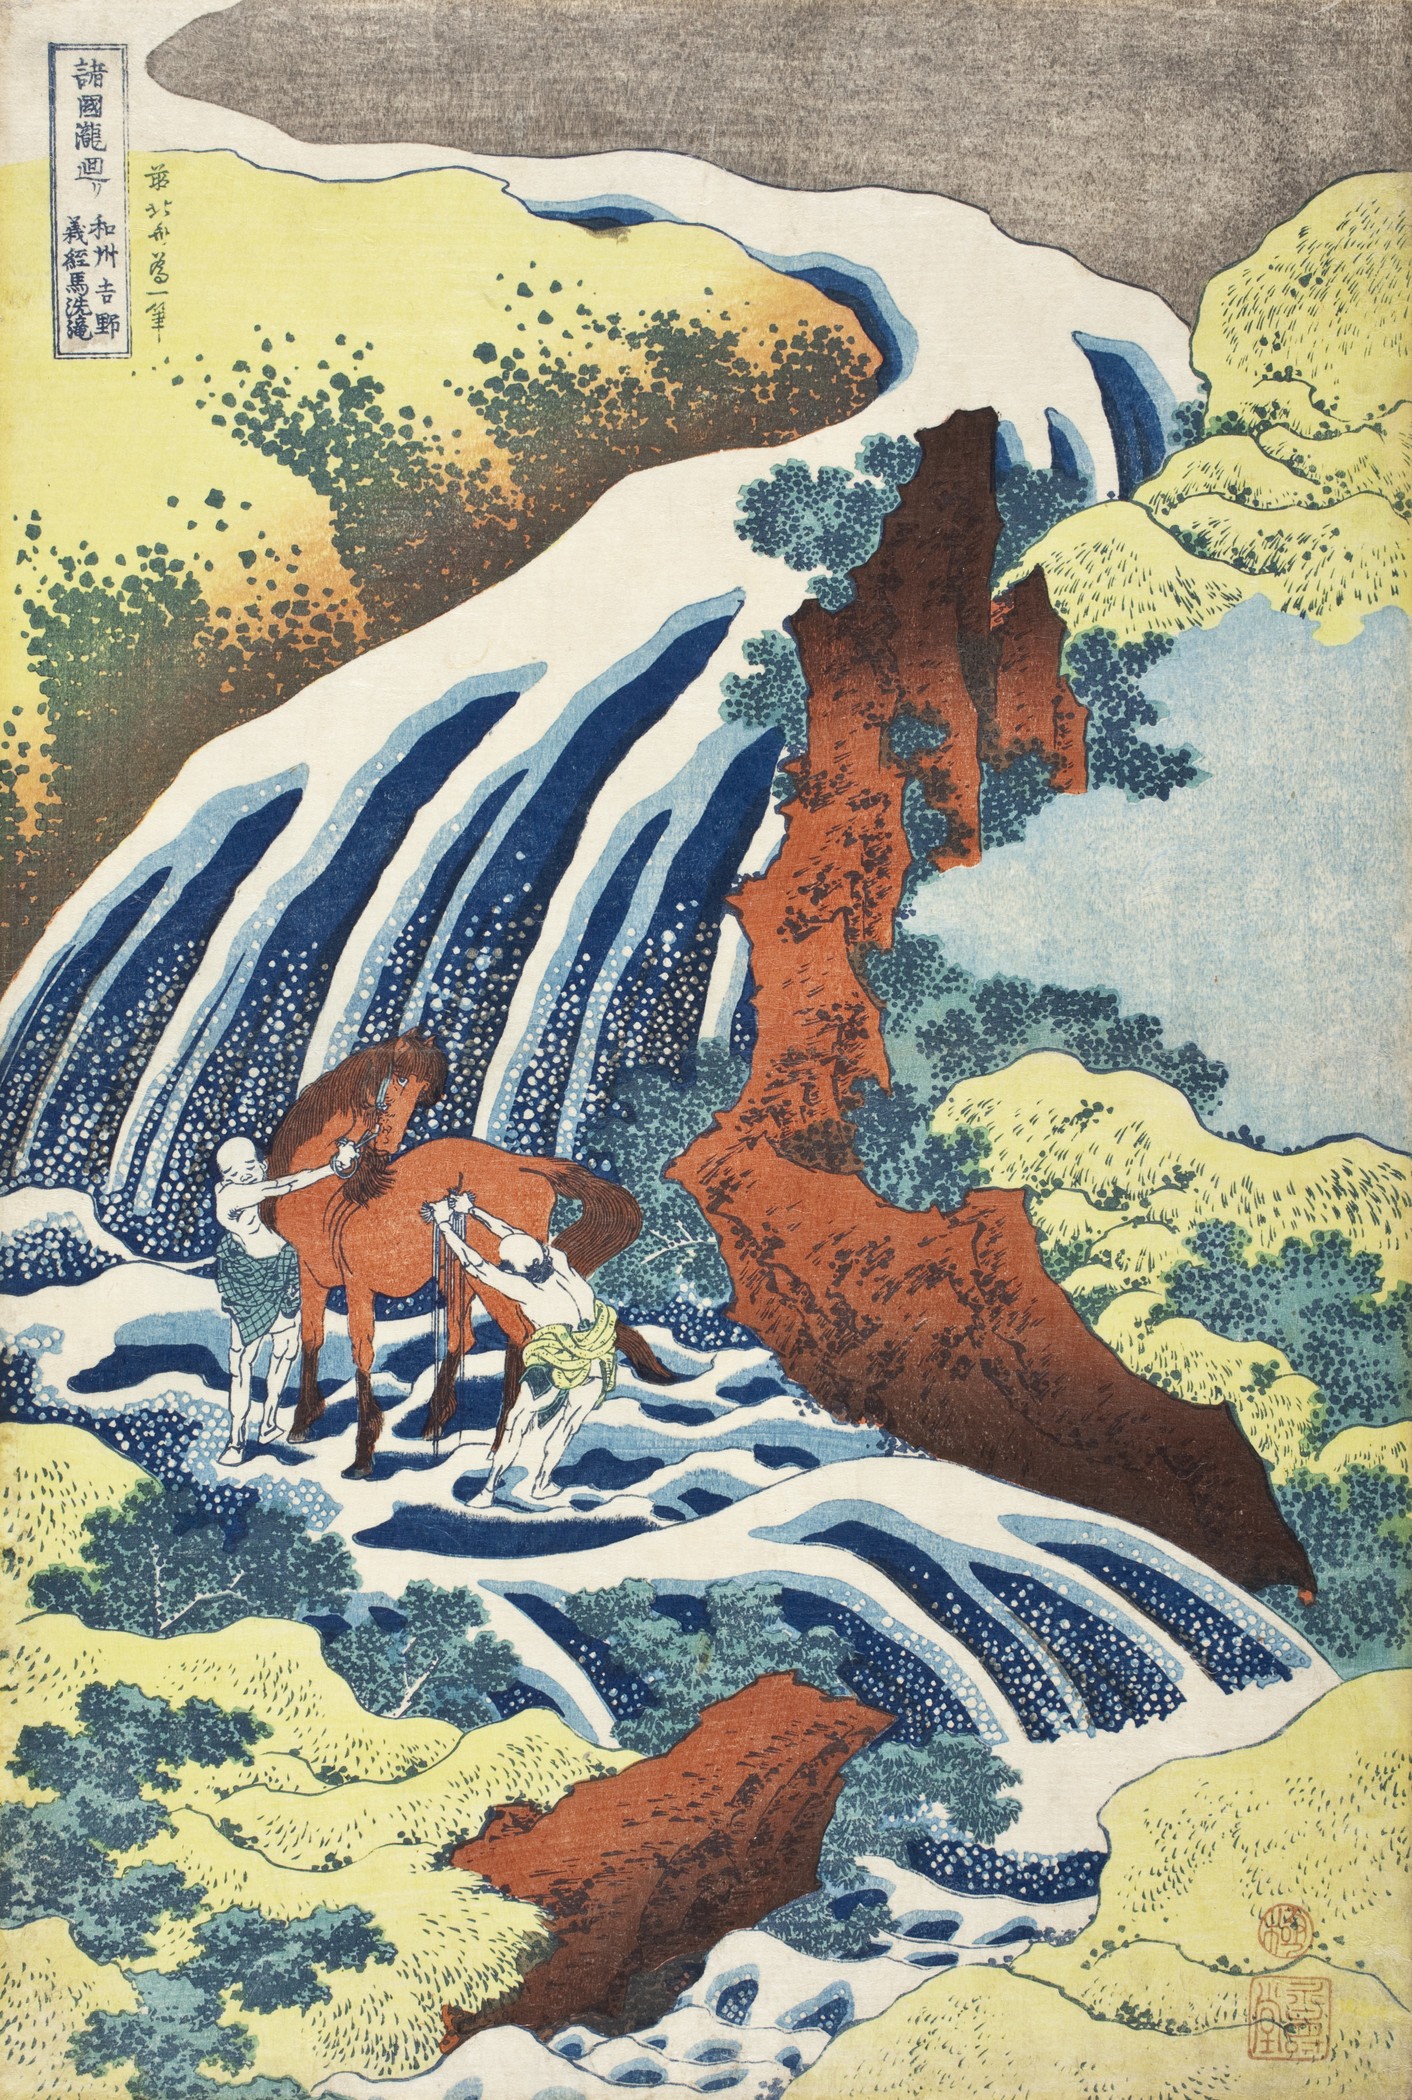 Life and works of Katsushika Hokusai